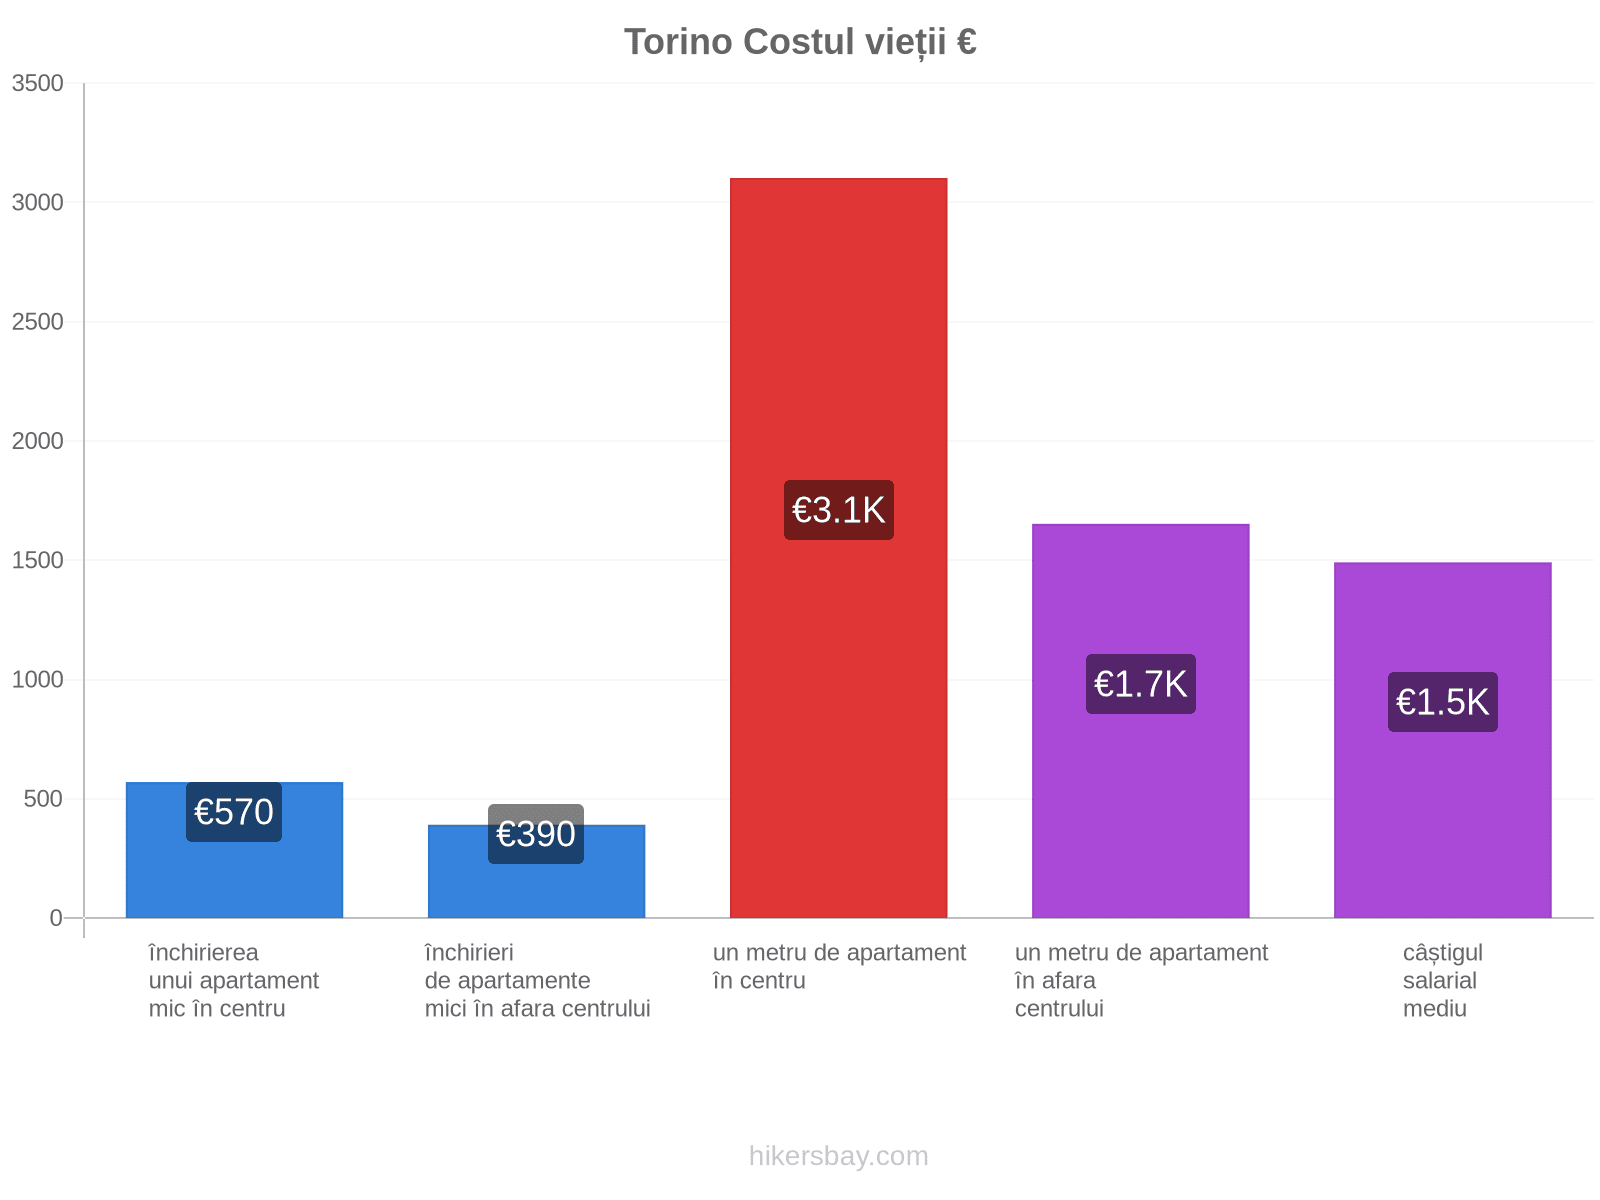 Torino costul vieții hikersbay.com